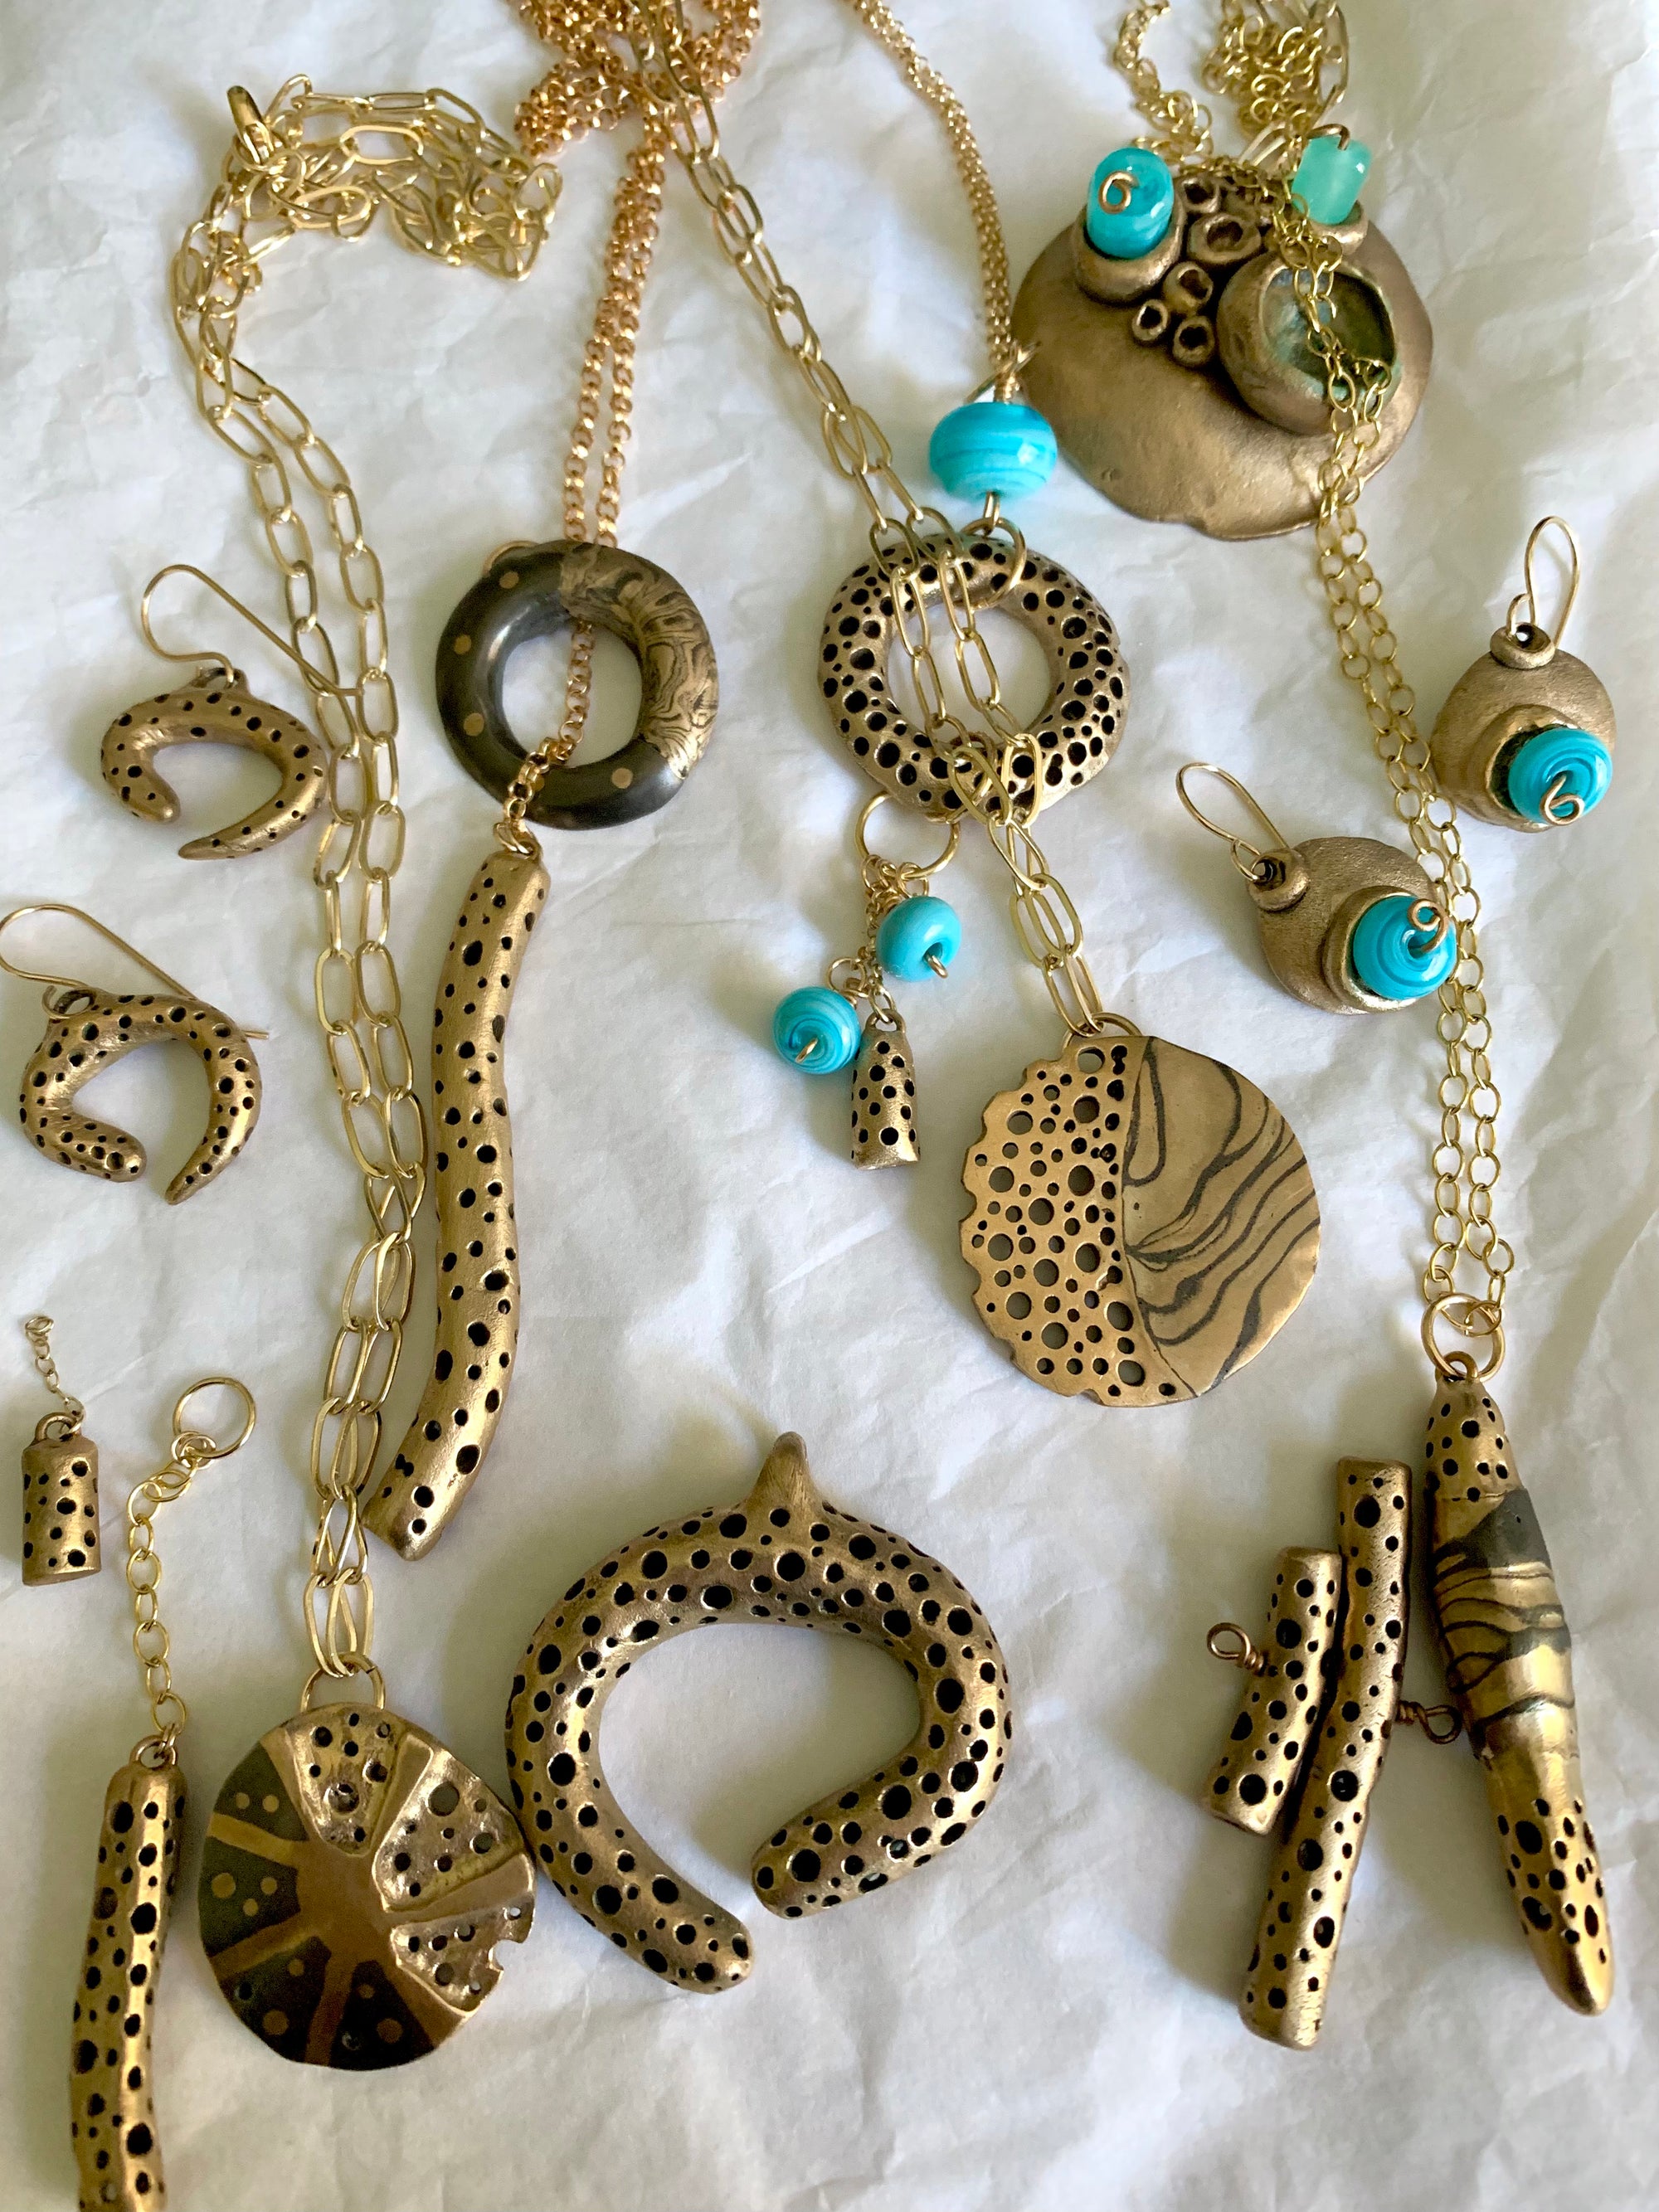 Handmade bronze jewelry pieces